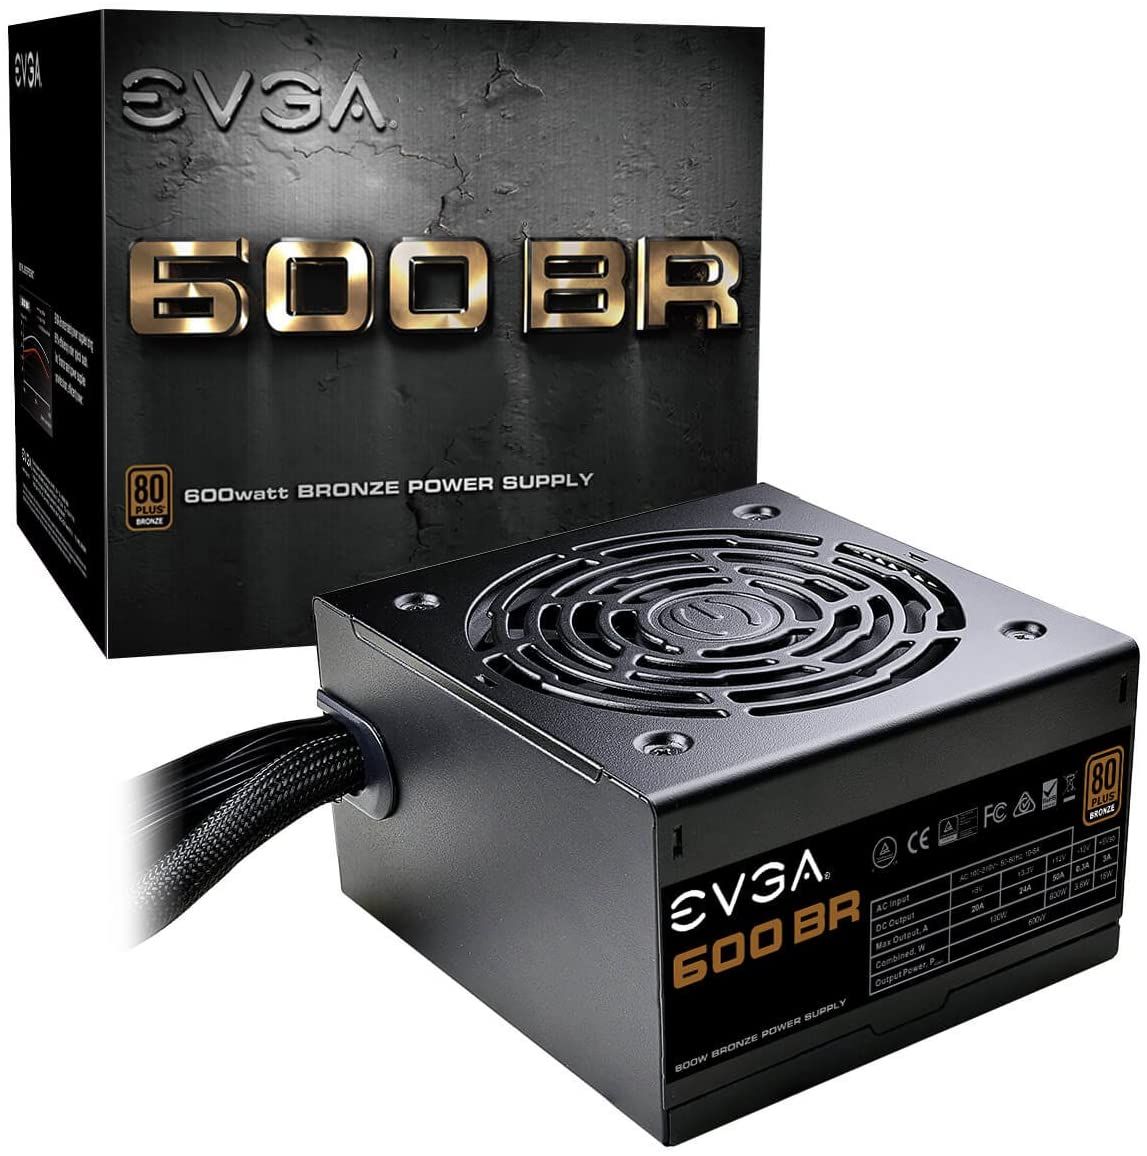 Alimentation PC EVGA 600 BR 80+ Bronze 600 Watts - Inforex Sénégal